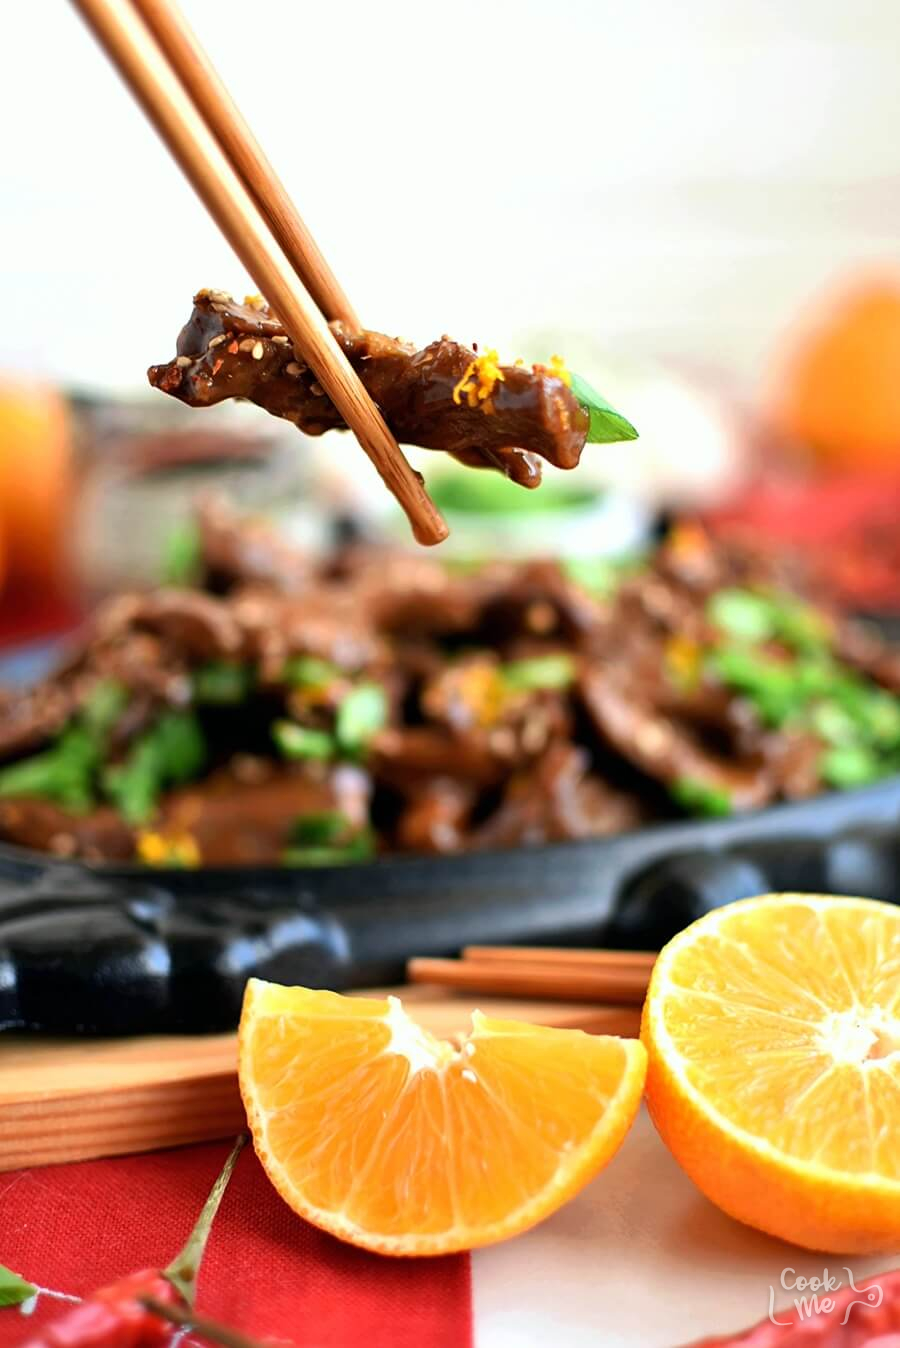 Spicy Tangerine Beef Recipe - Cook.me Recipes